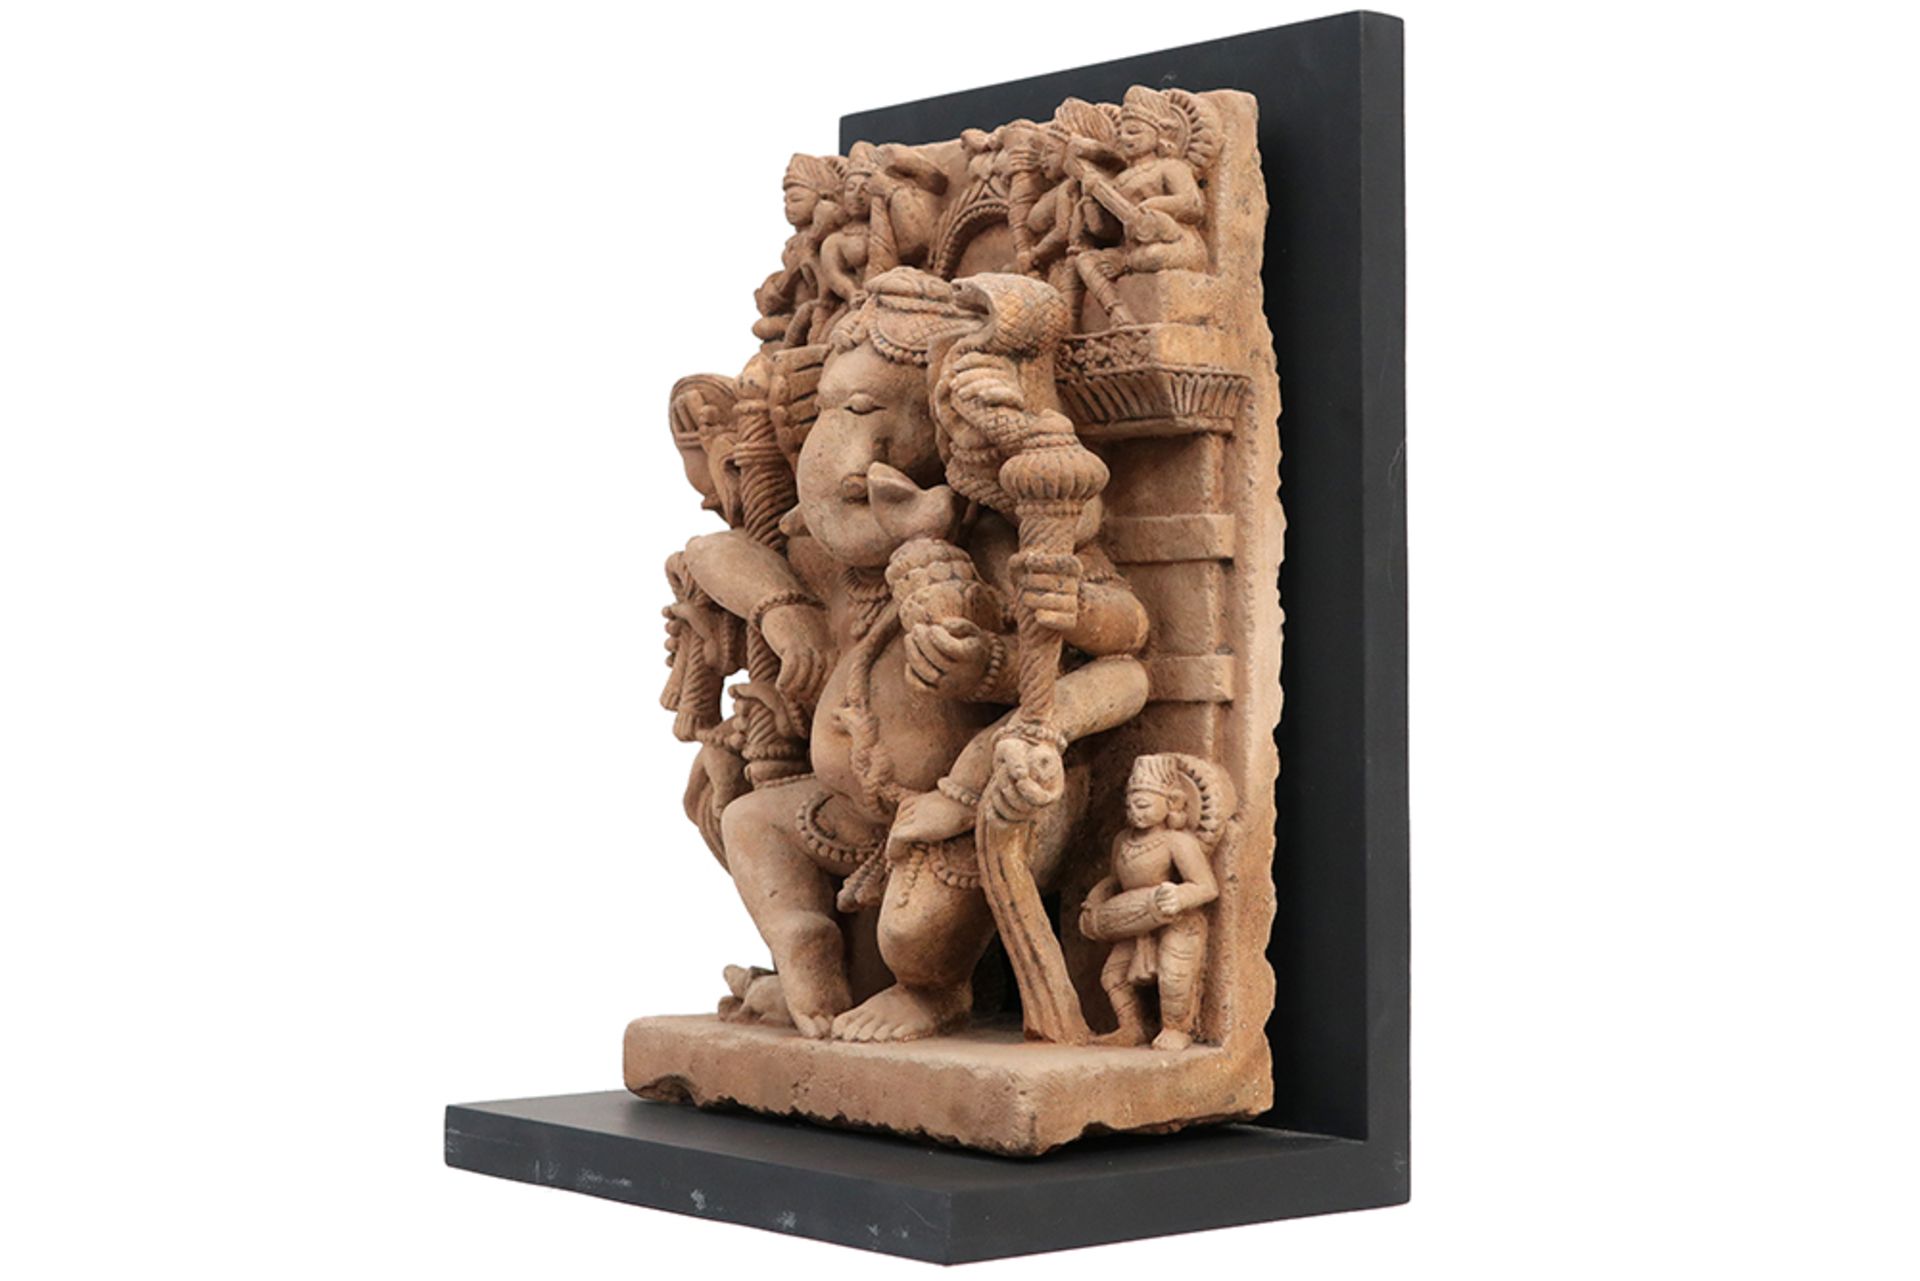 10th/11th Cent. Indian Madhya Pradesh "Ganesha" sculpture in sandstone || INDIA / MADHYA PRADESH - - Image 4 of 4